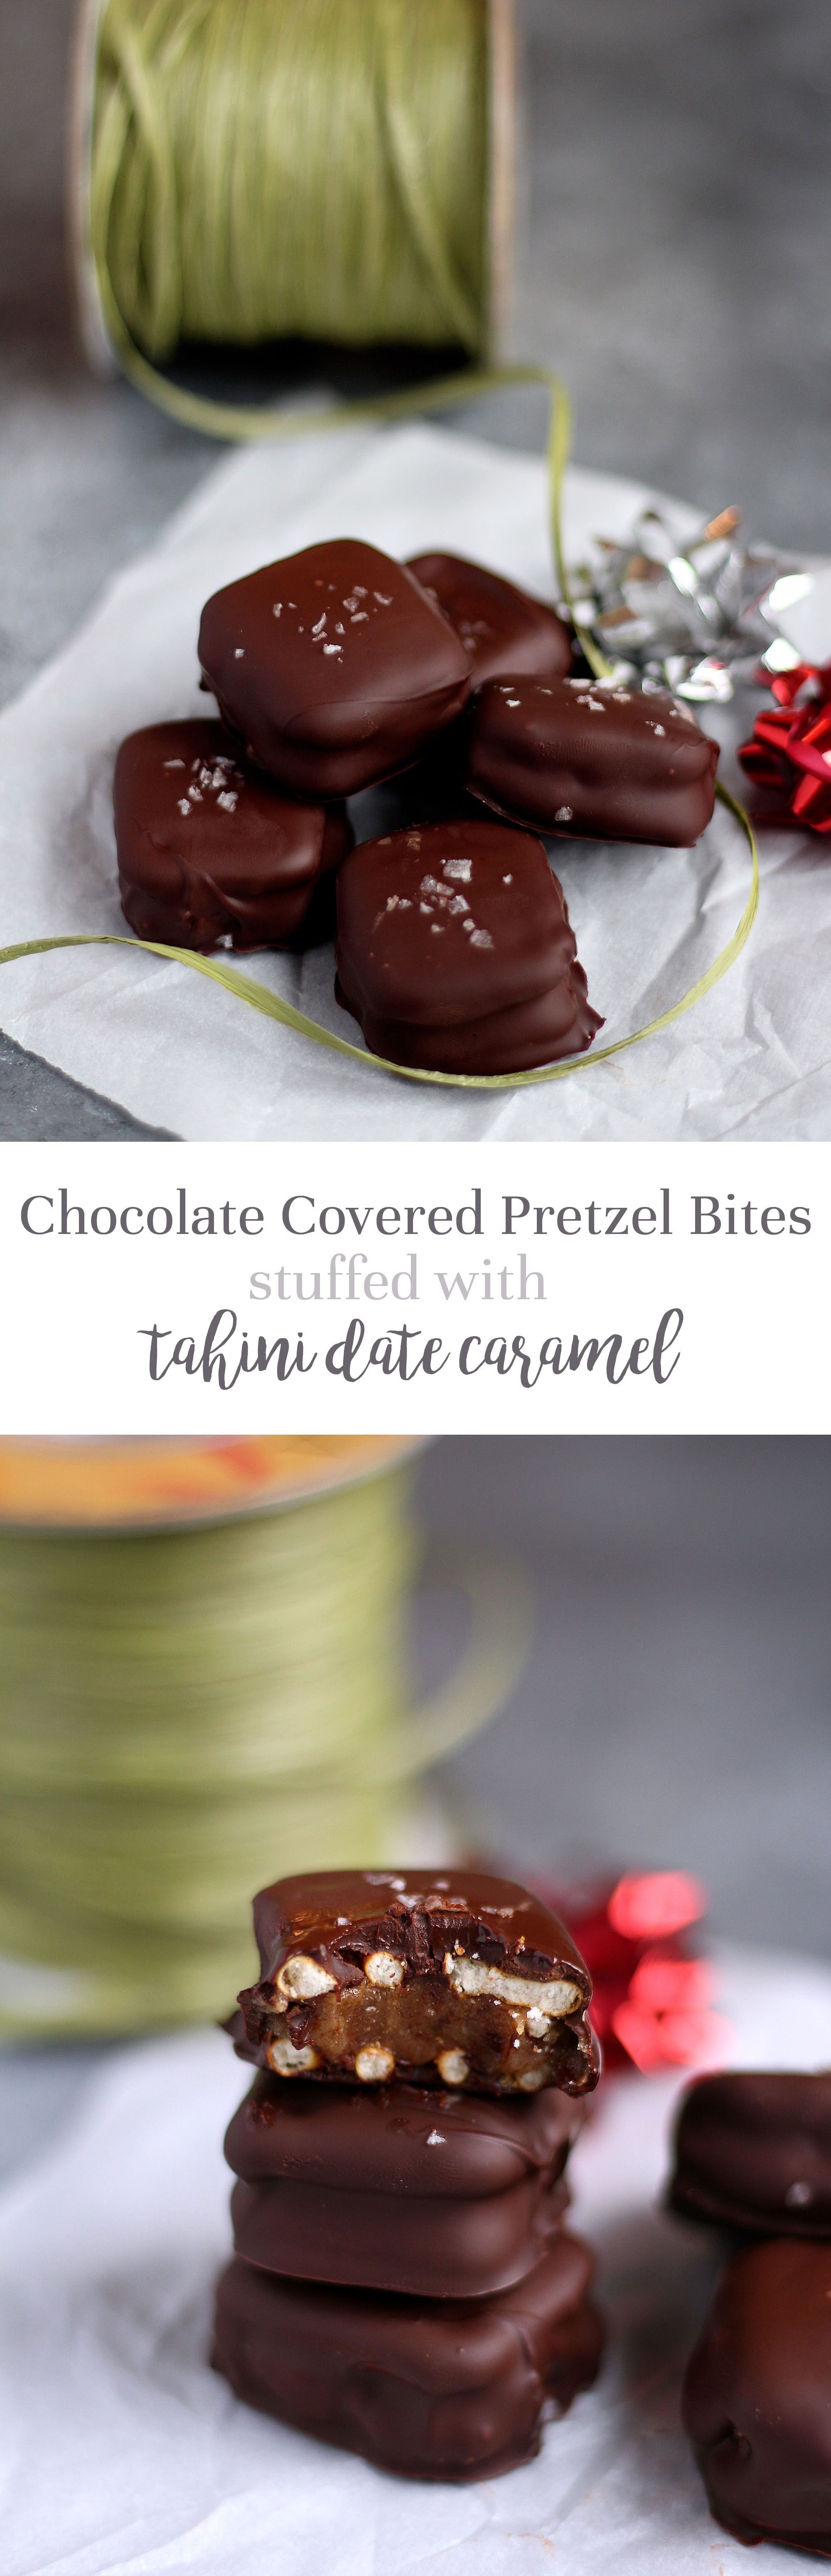 Chocolate Covered Pretzel Bites Stuffed with Tahini Date Caramel